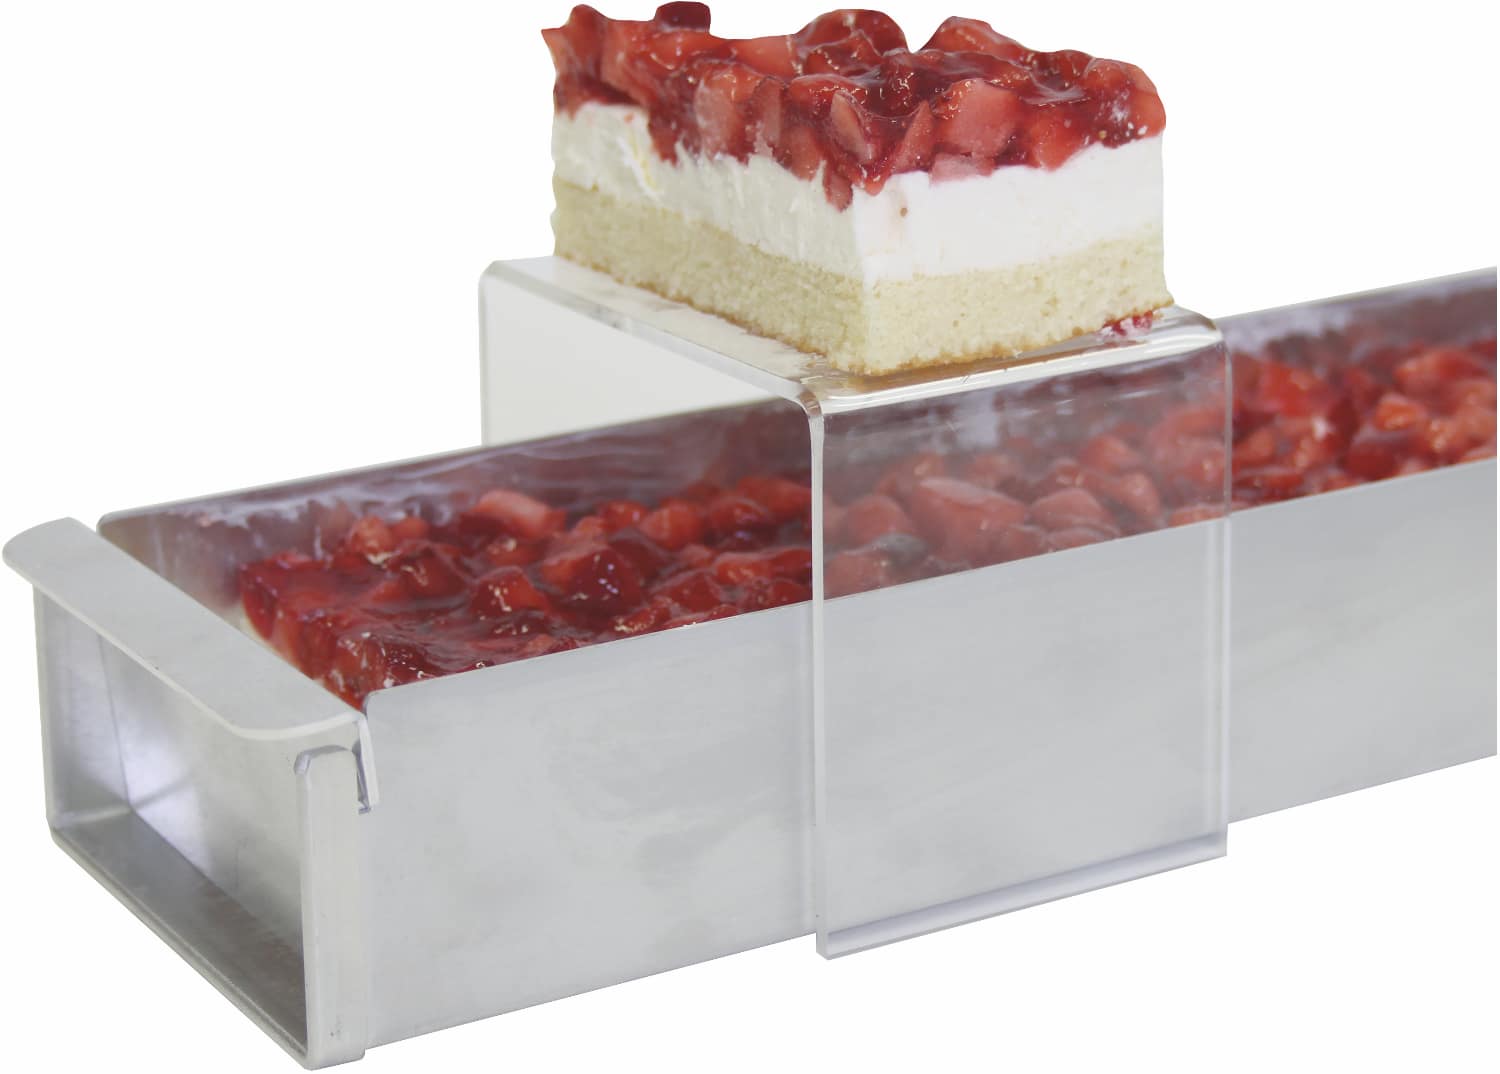 Display riser for sliced cakes